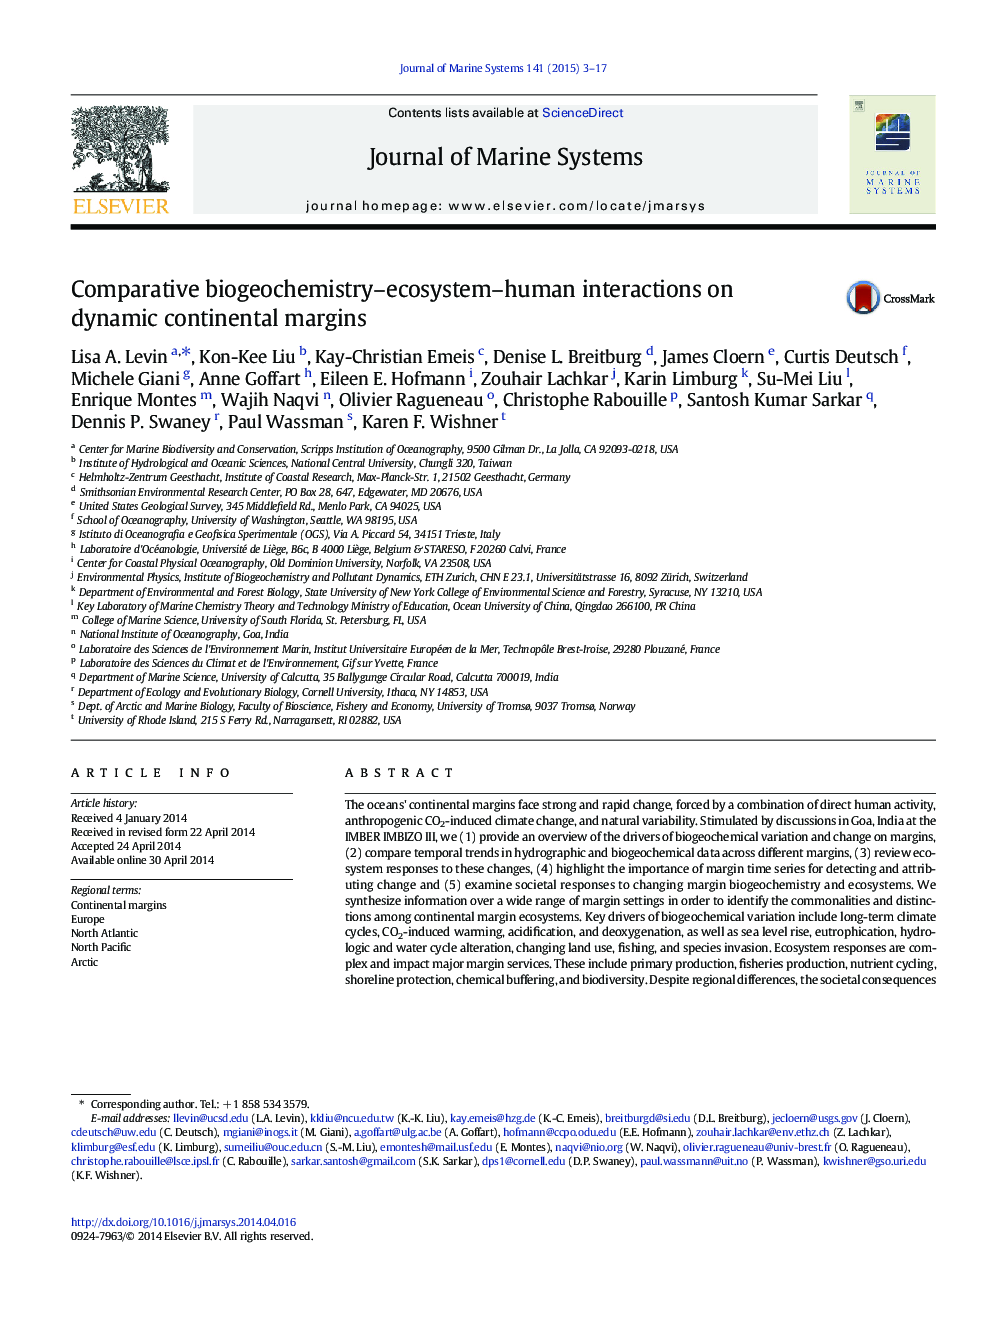 Comparative biogeochemistry-ecosystem-human interactions on dynamic continental margins